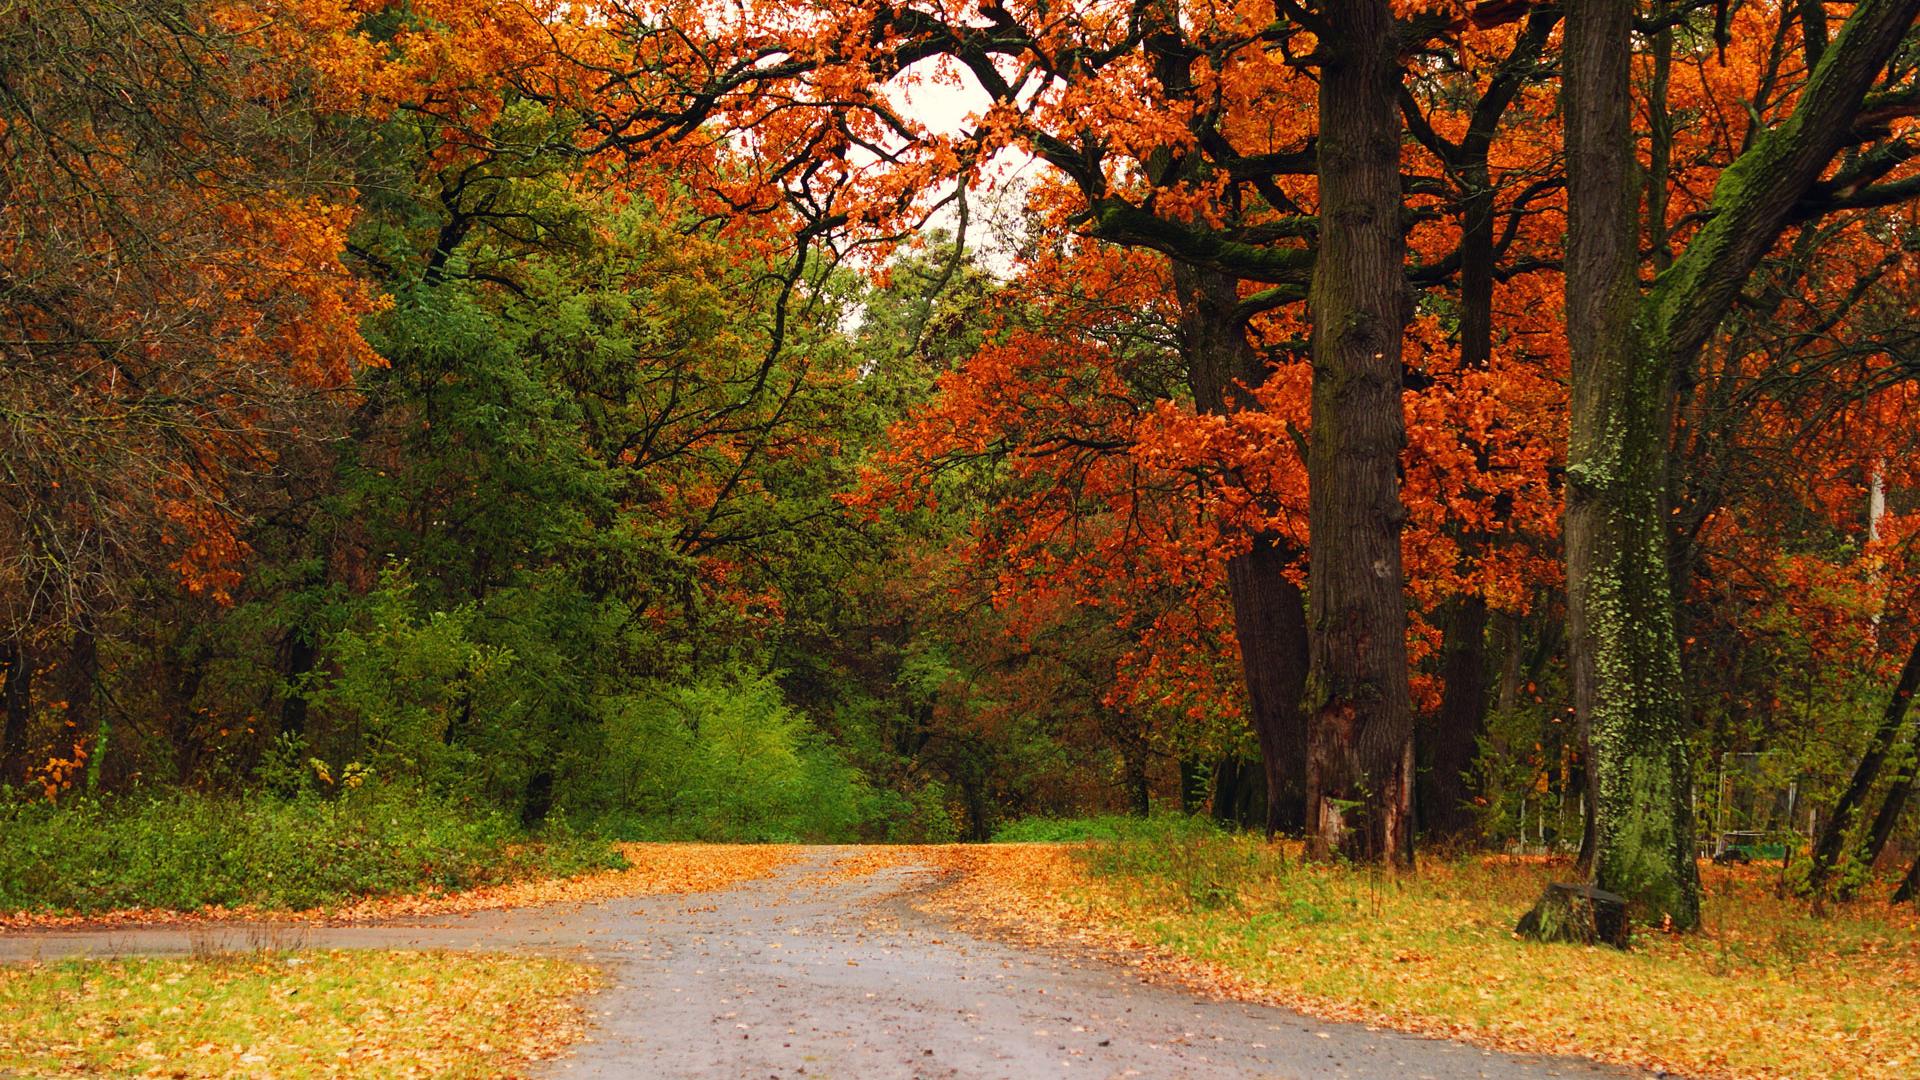 Background Autumn Scenic Wallpaper Woods Beautiful Image